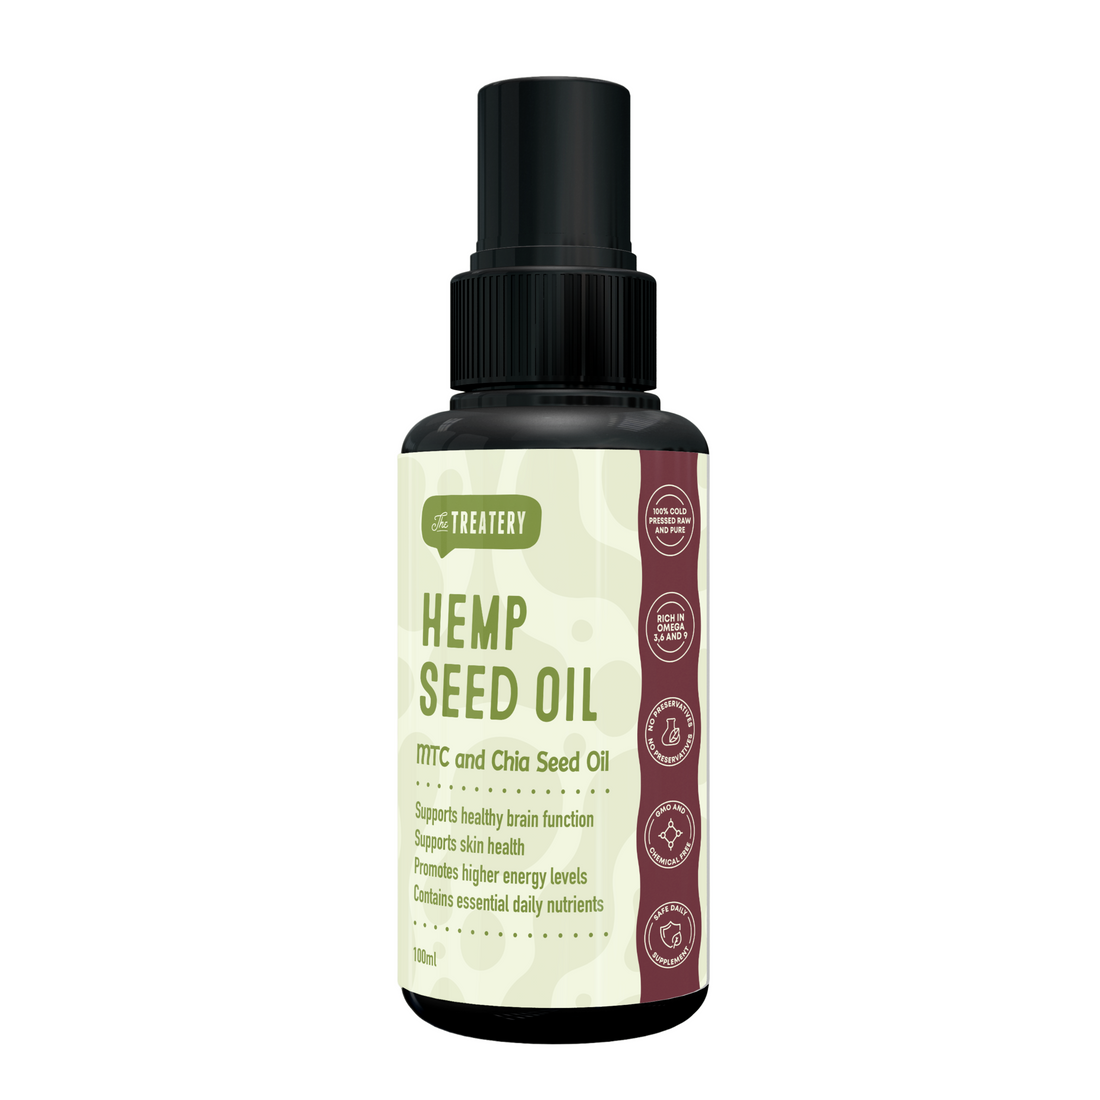 Hemp Seed Oil: MCT and Chia Seed Oil